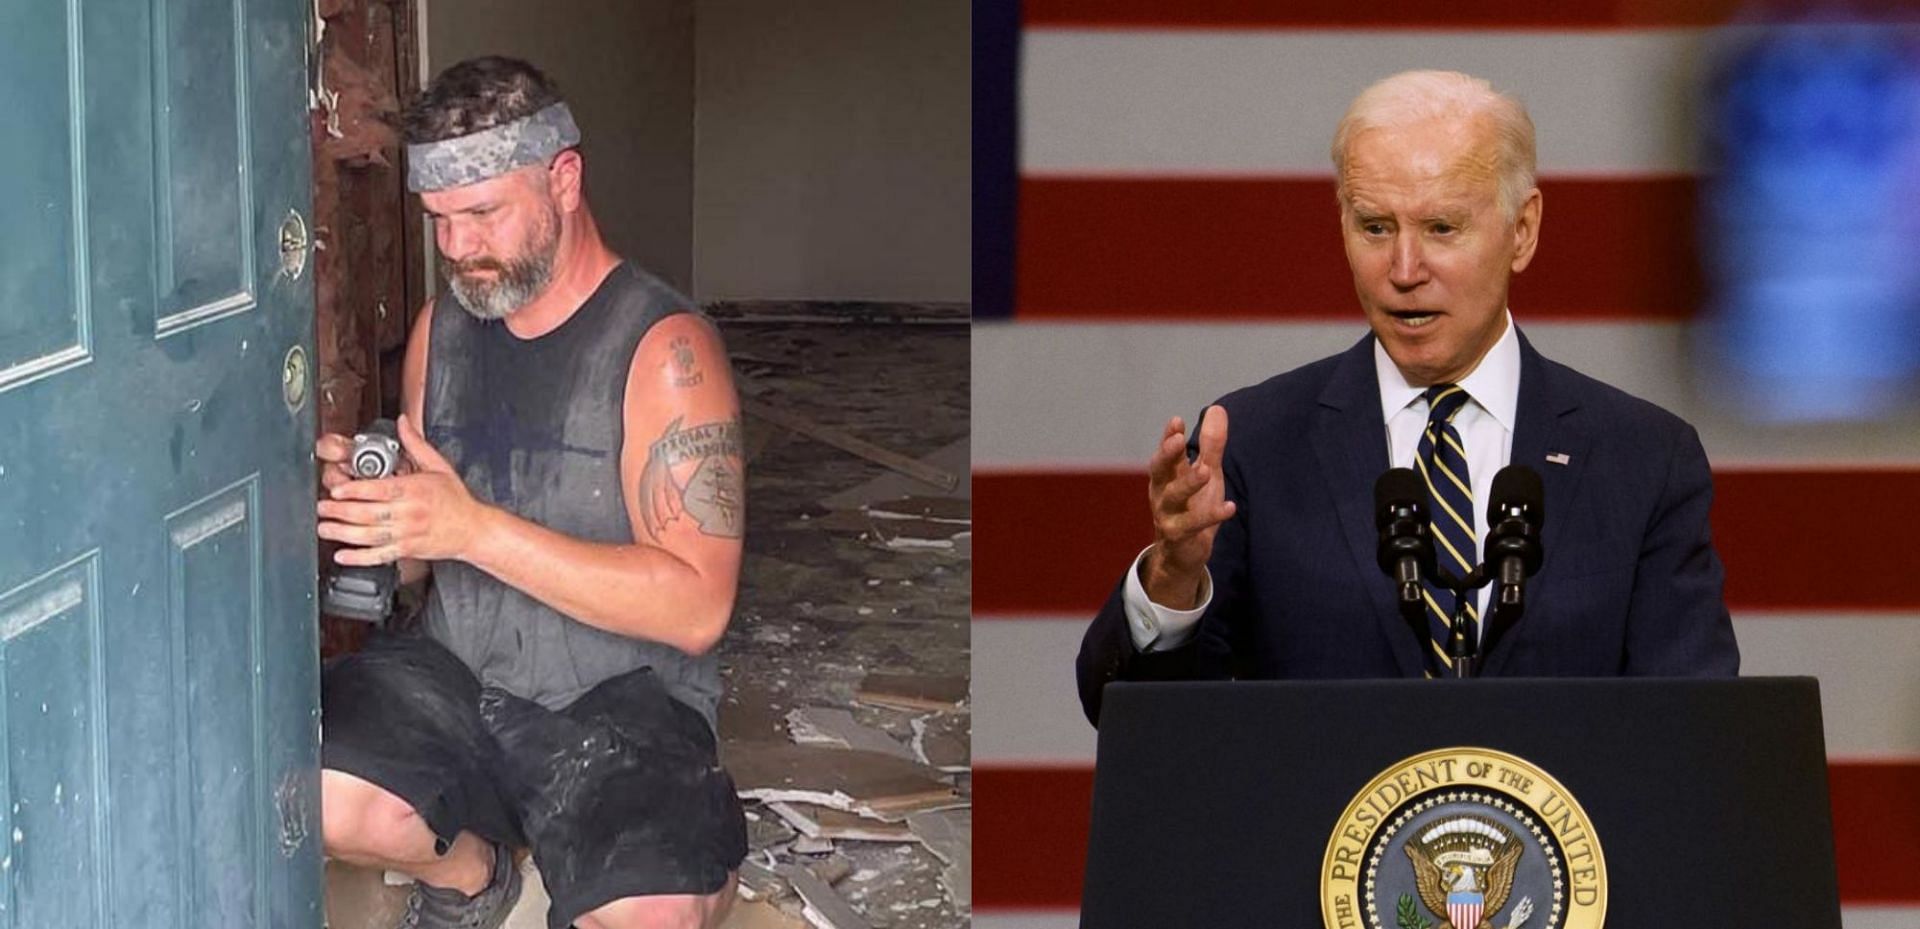 Scott Merryman has been charged with threatening President Joe Biden (Image via Scott Merryman/Instagram and Jeff Swensen/Getty Images)